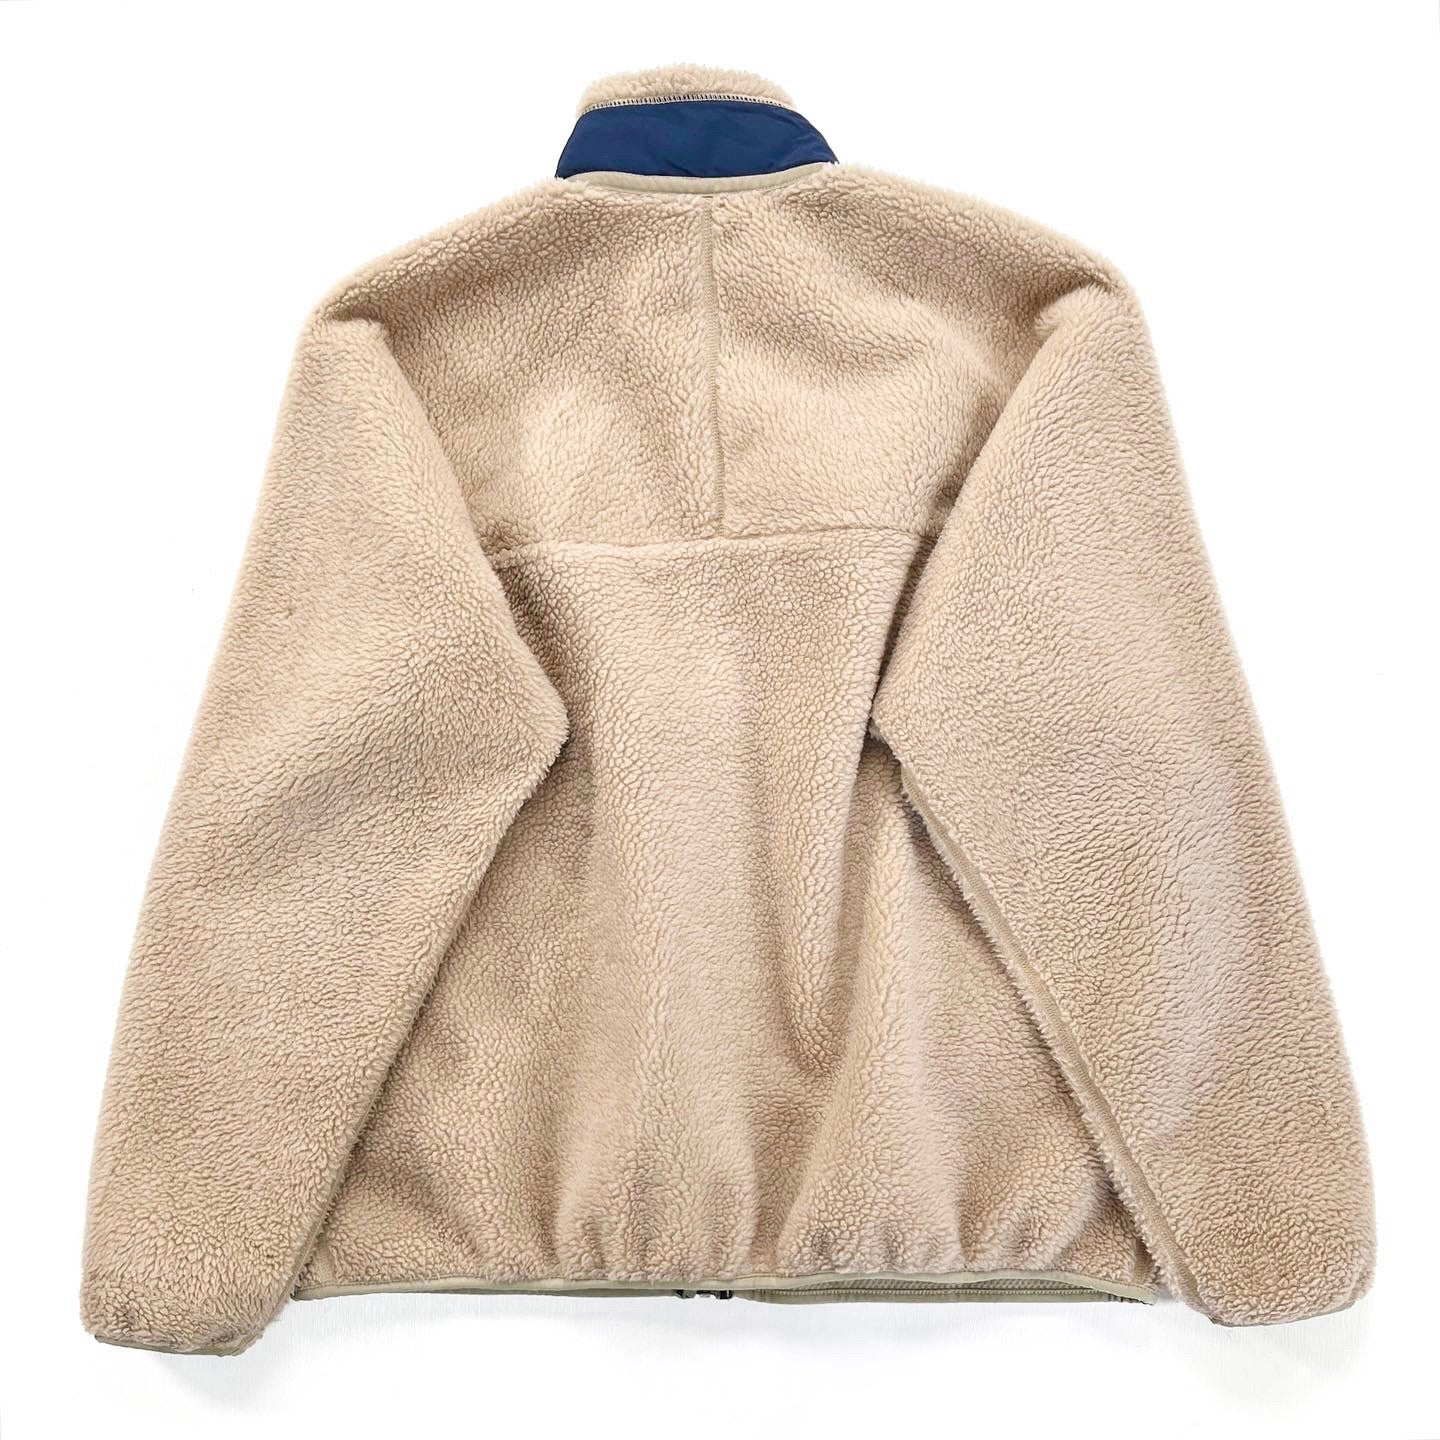 2006 Patagonia Classic Retro-X Fleece Jacket, Natural & Navy (XL)